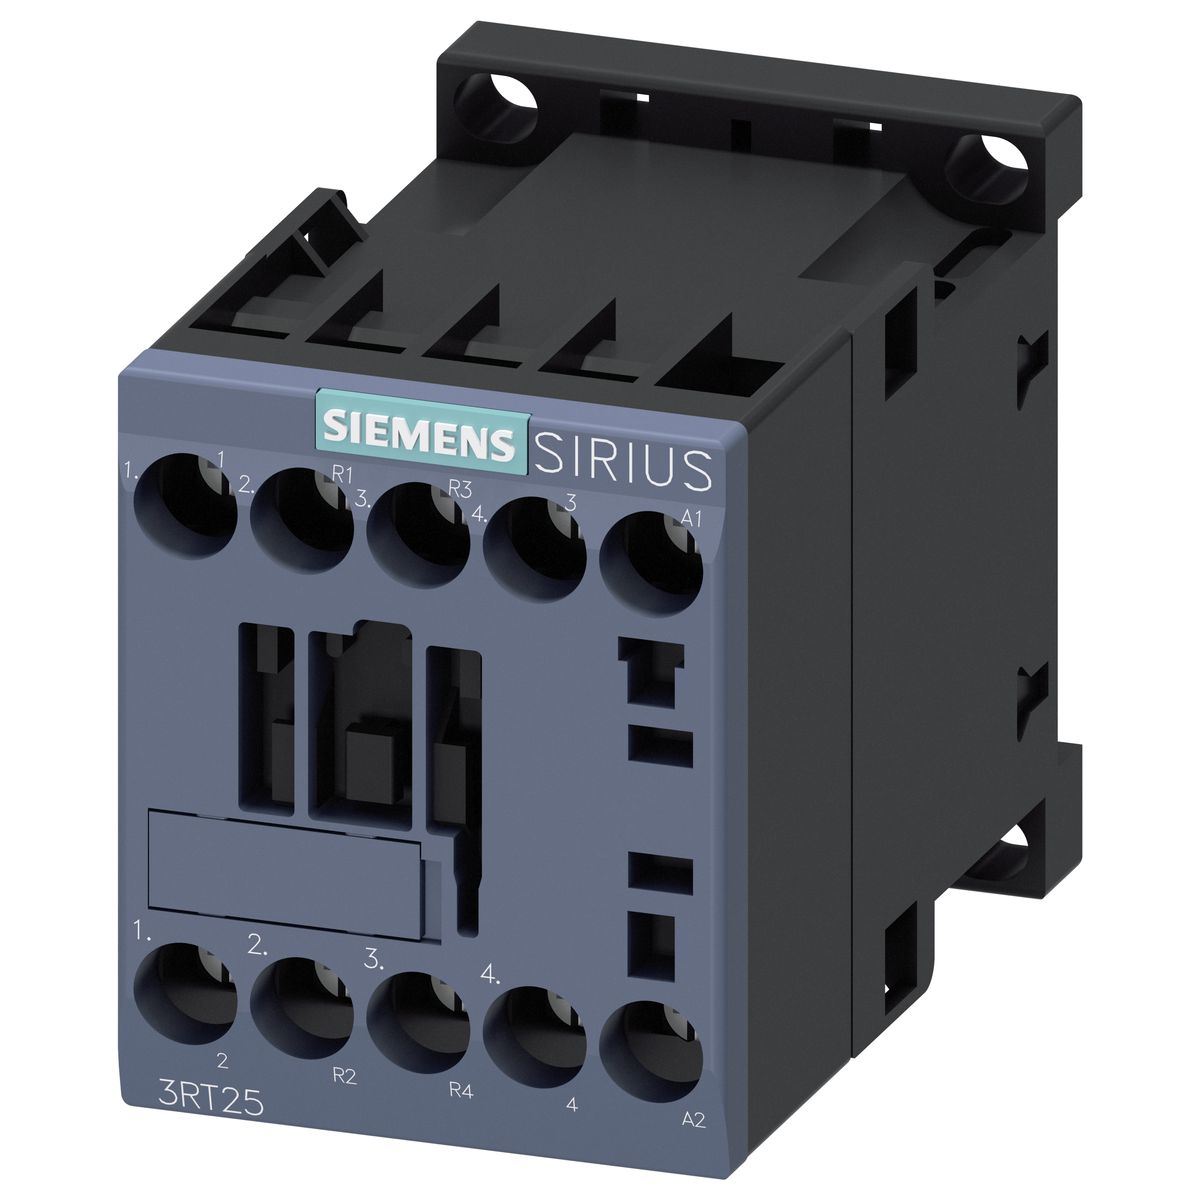 Миниконтактор Siemens Sirius 3RT2 4P, 9А, 200V/AC, винтовой зажим (3RT2516-1AN60)